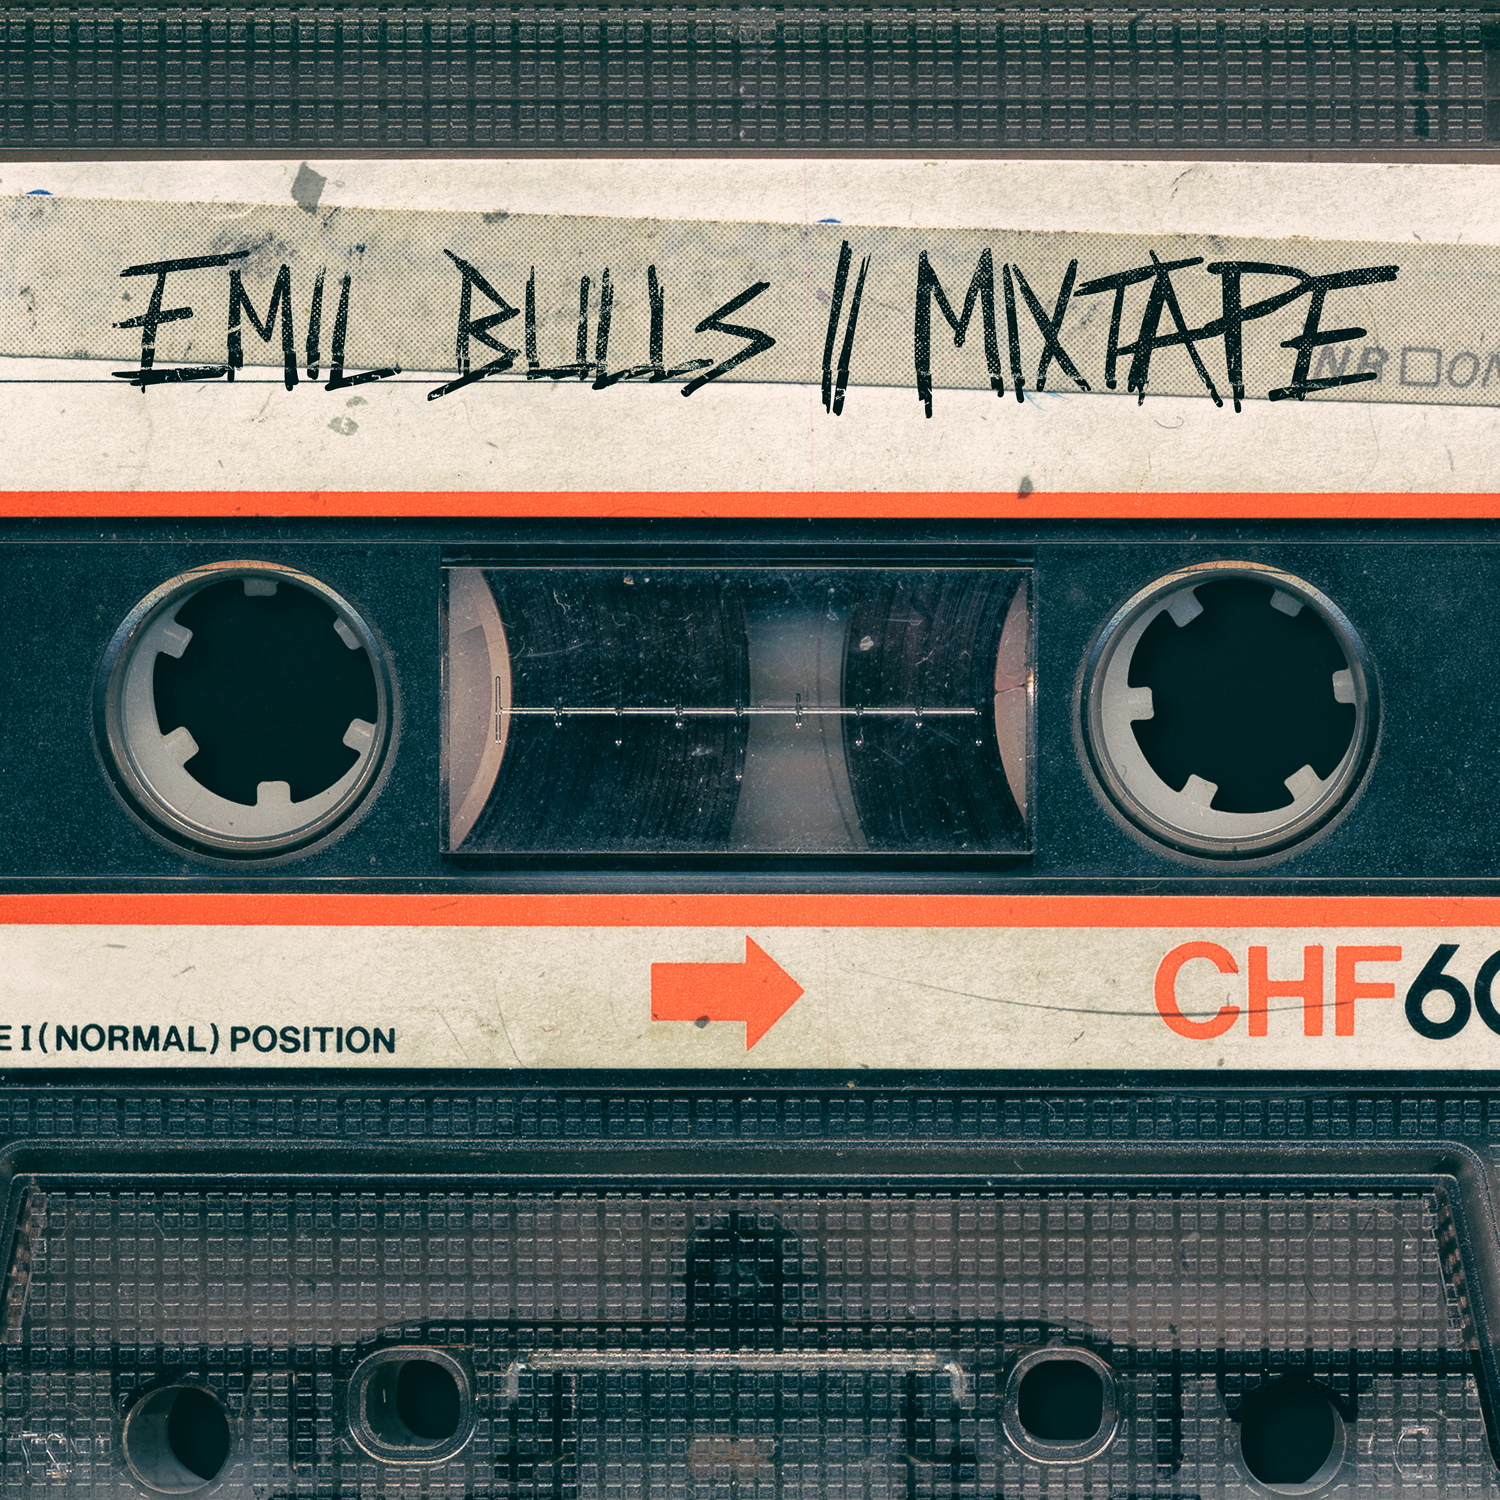 emil-bulls-mixtape-der-name-ist-programm-album-review